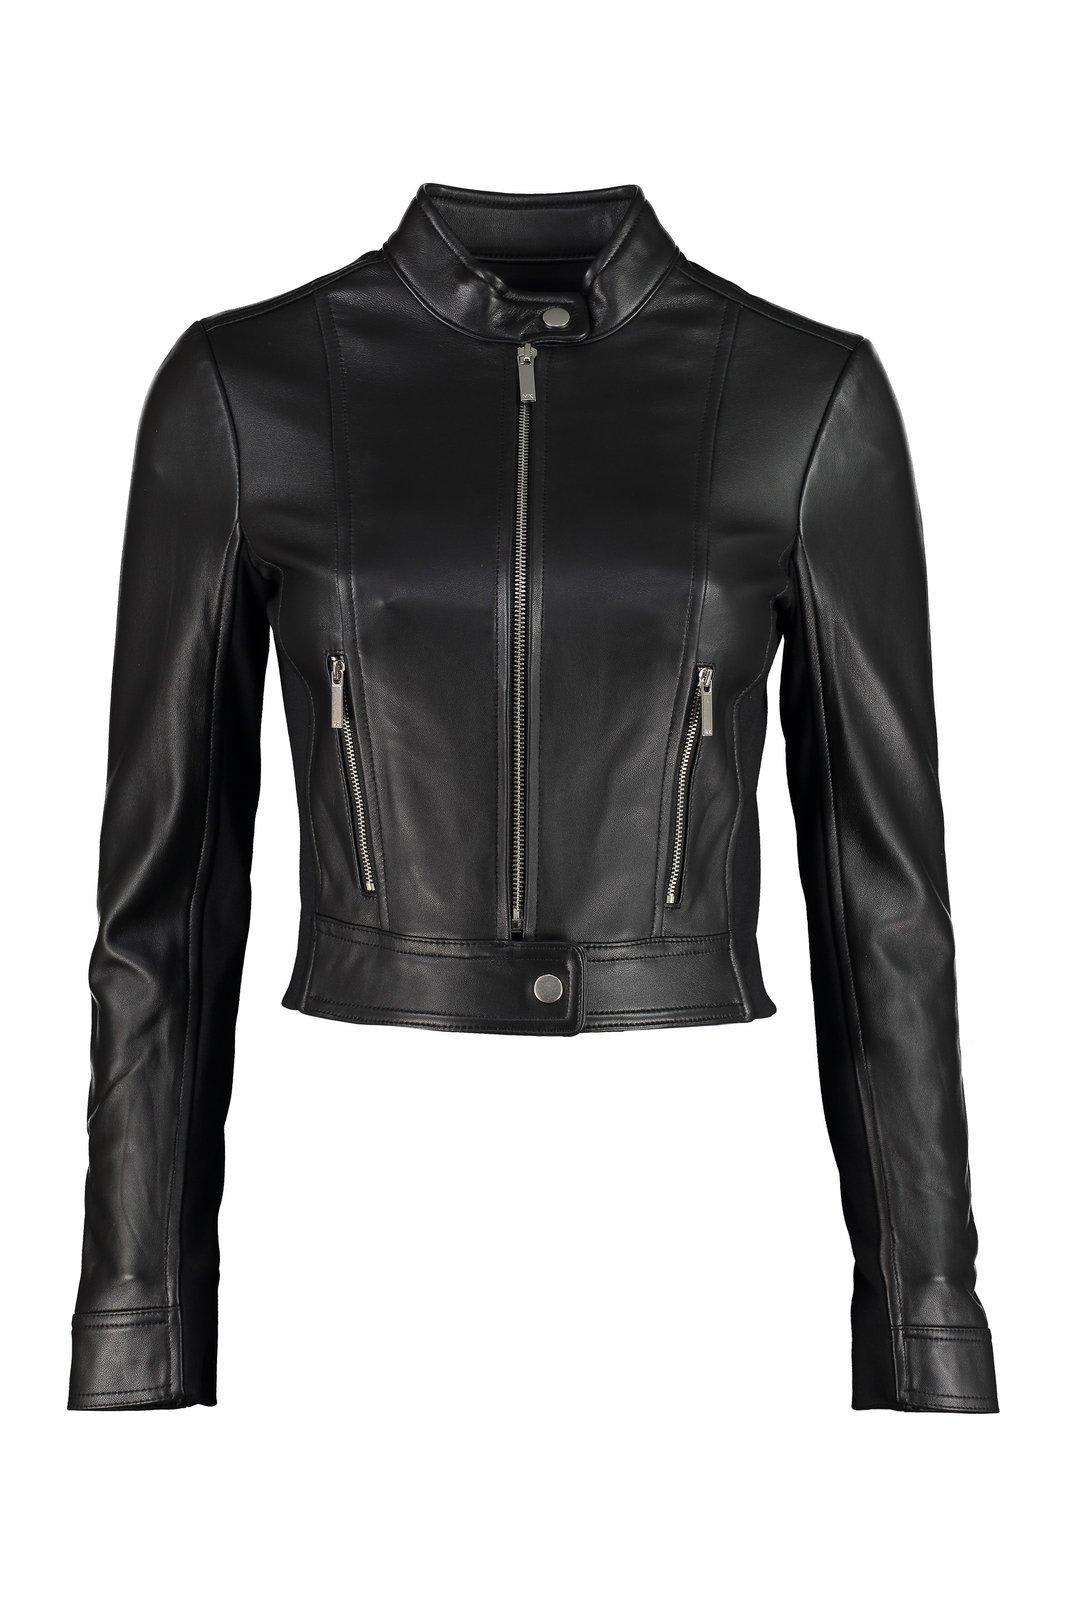 Michael Kors Cropped Leather Biker Jacket in Black | Lyst